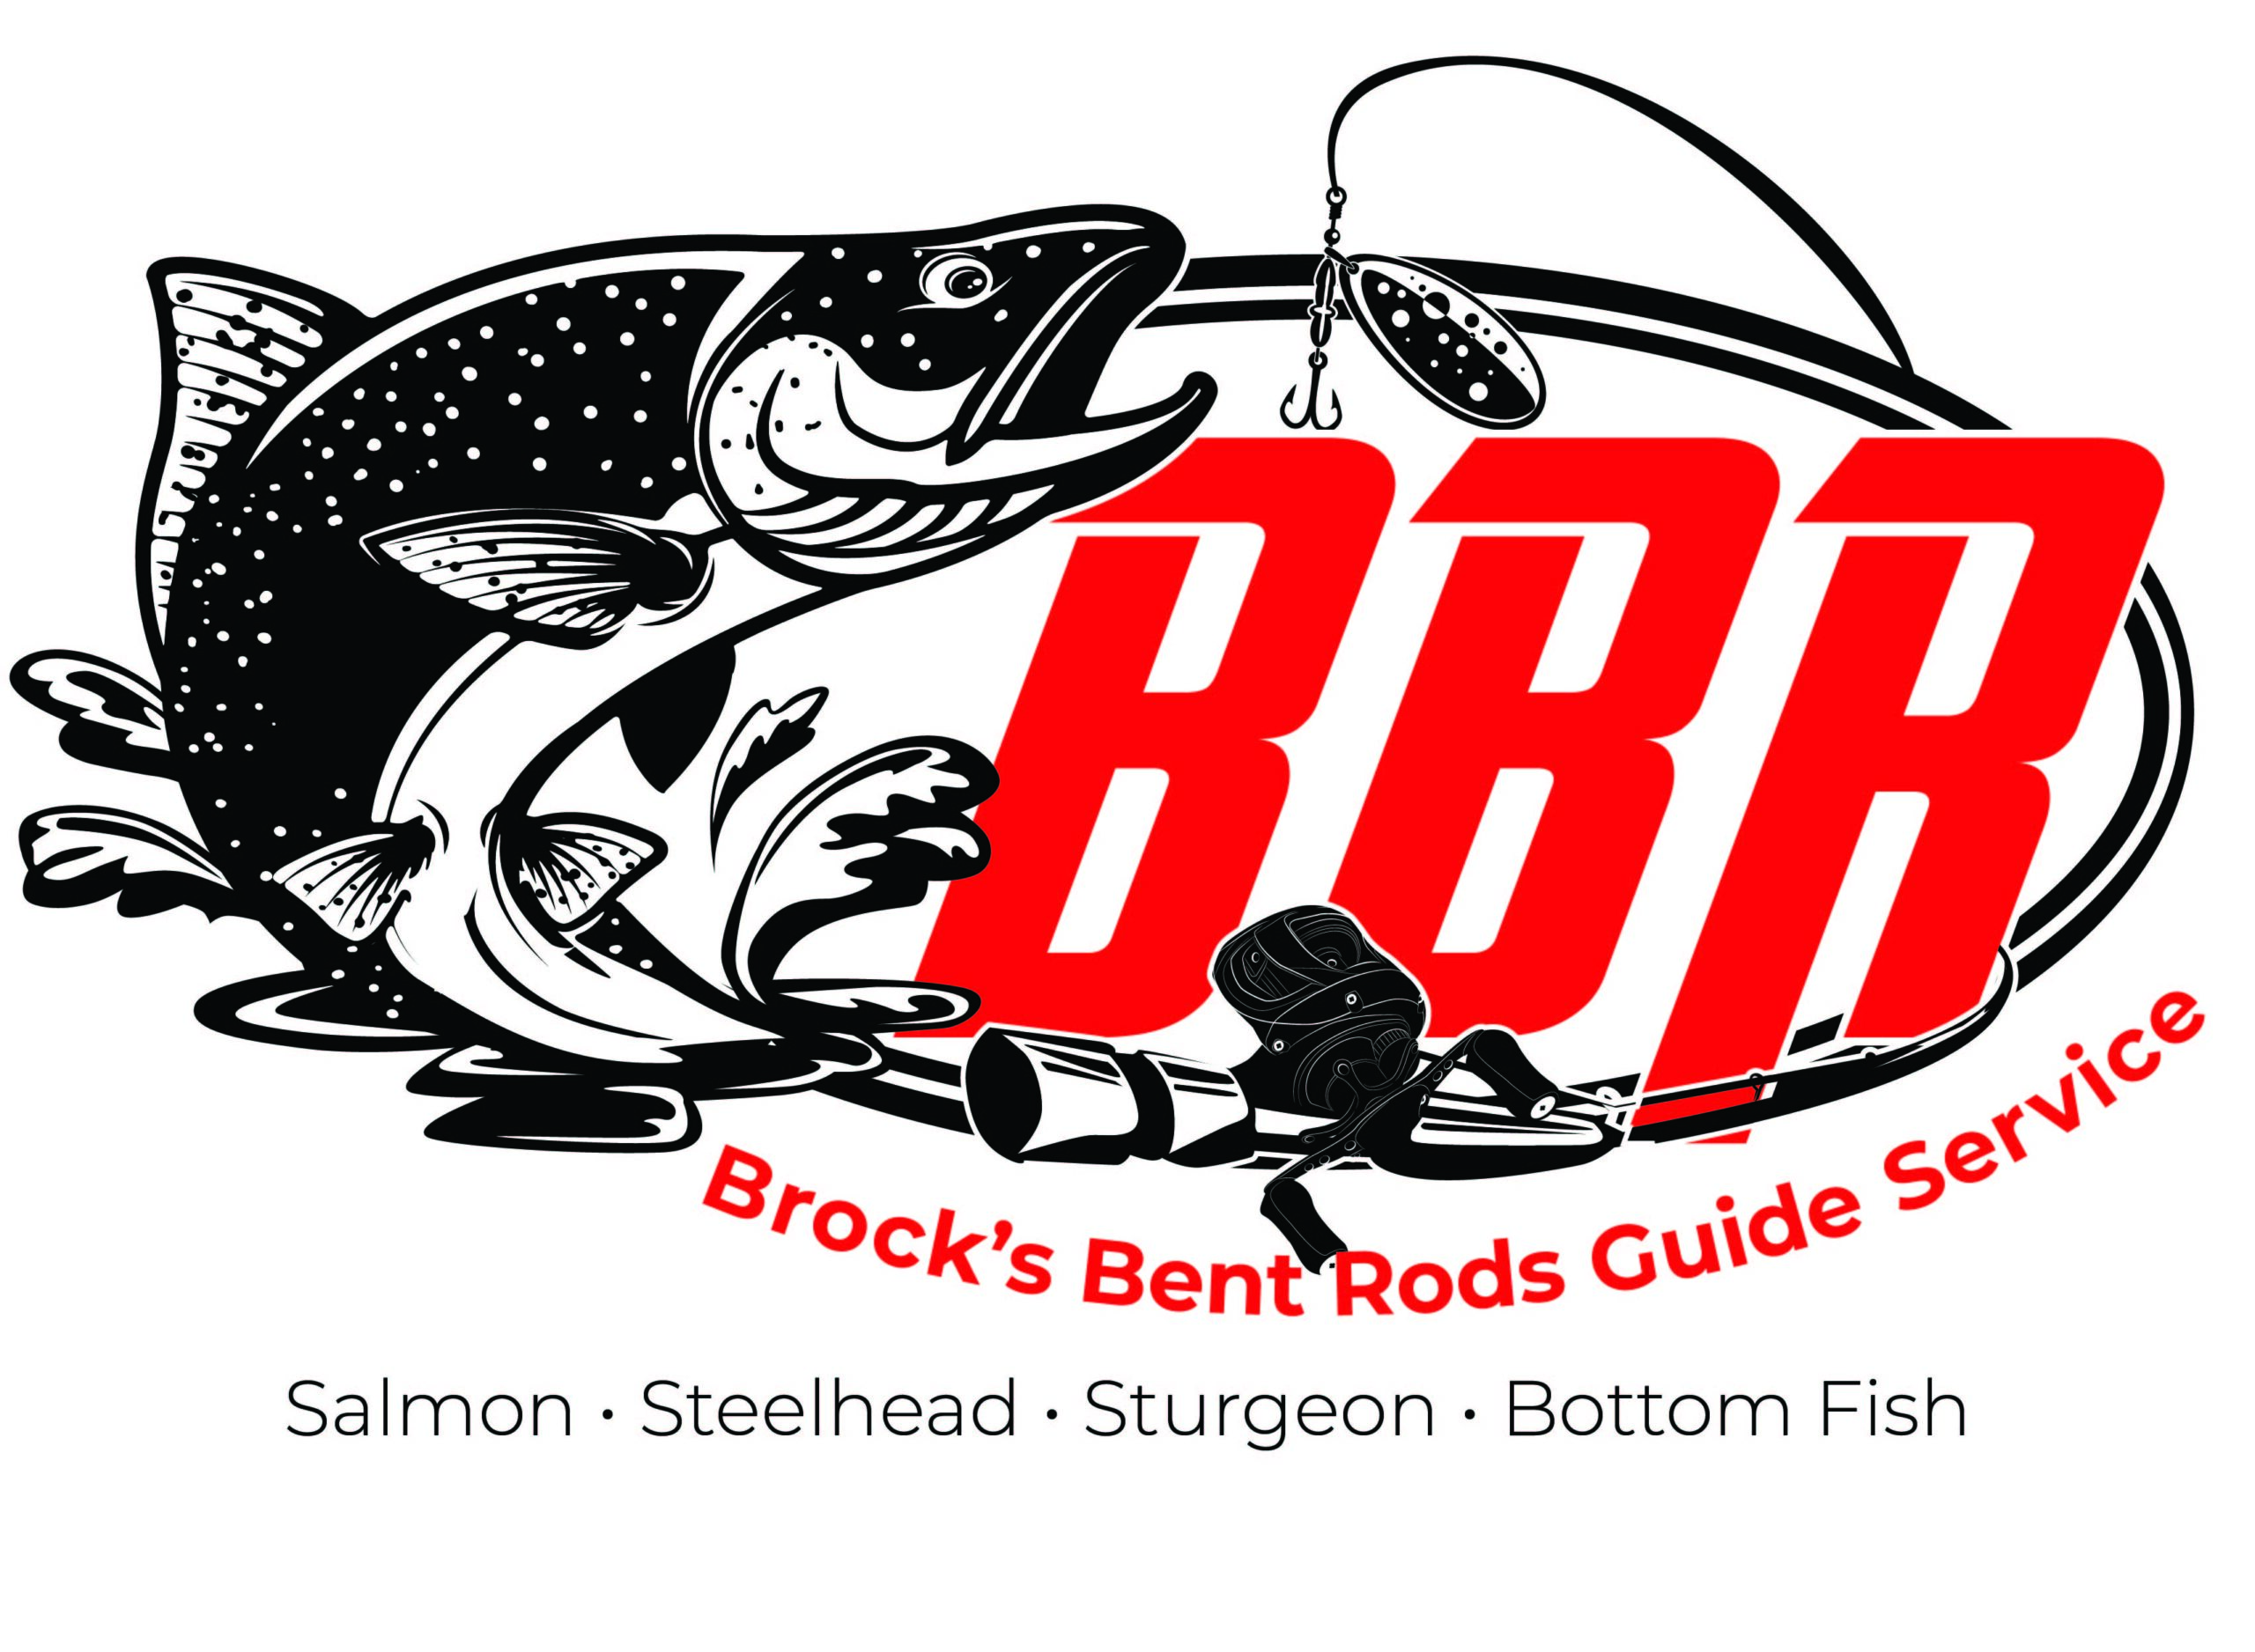 brocks bent rods guide service logo